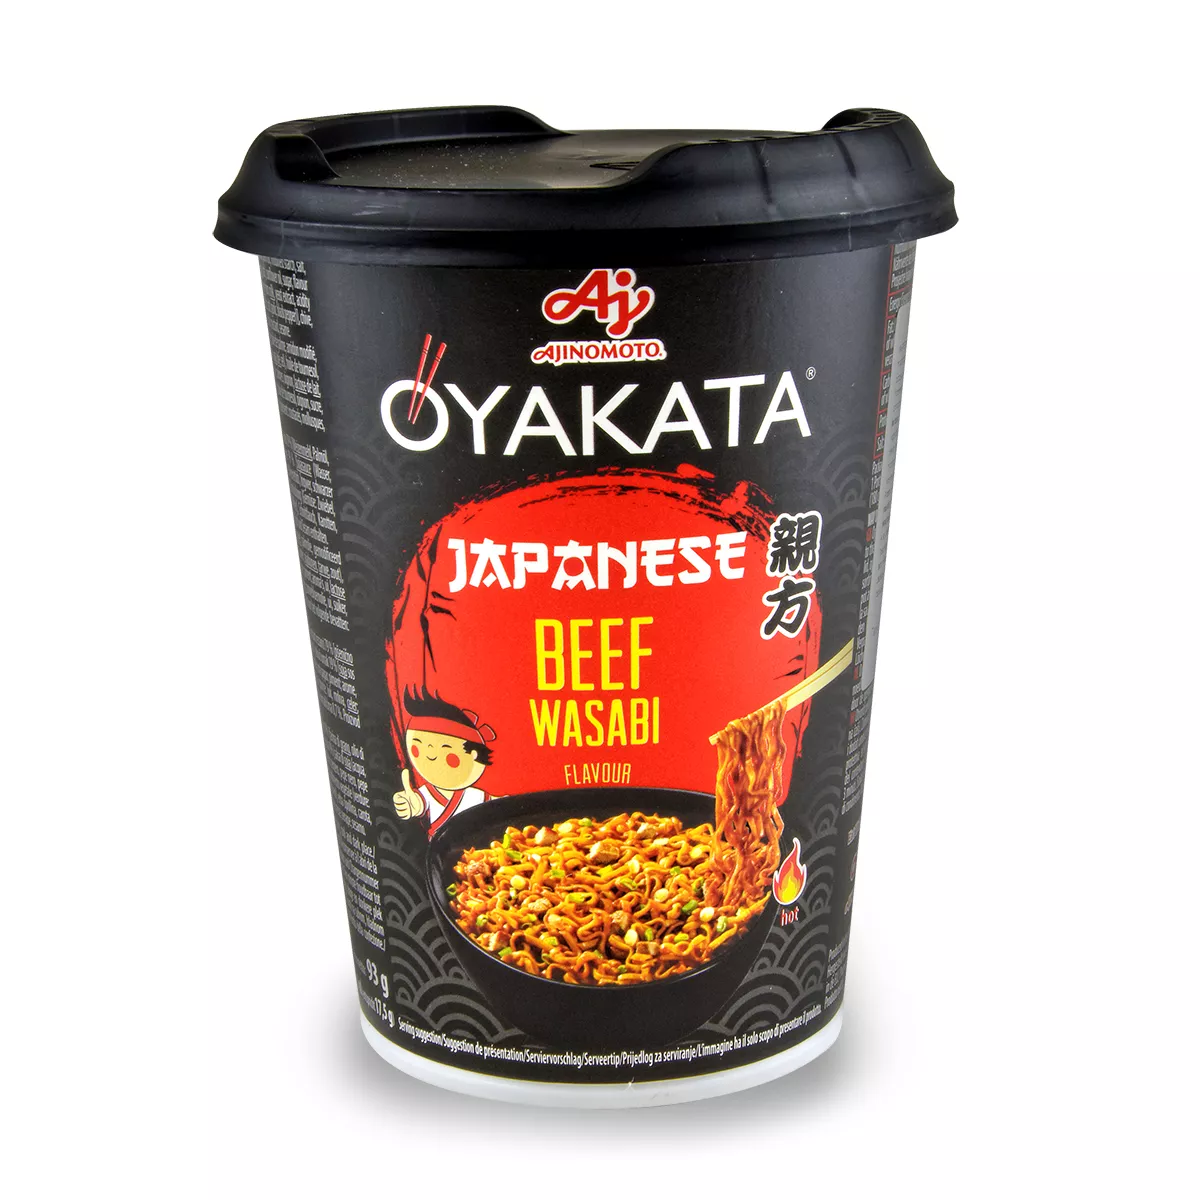 Taitei instant Beef Wasabi CUP OYAKATA 93g, [],asianfood.ro